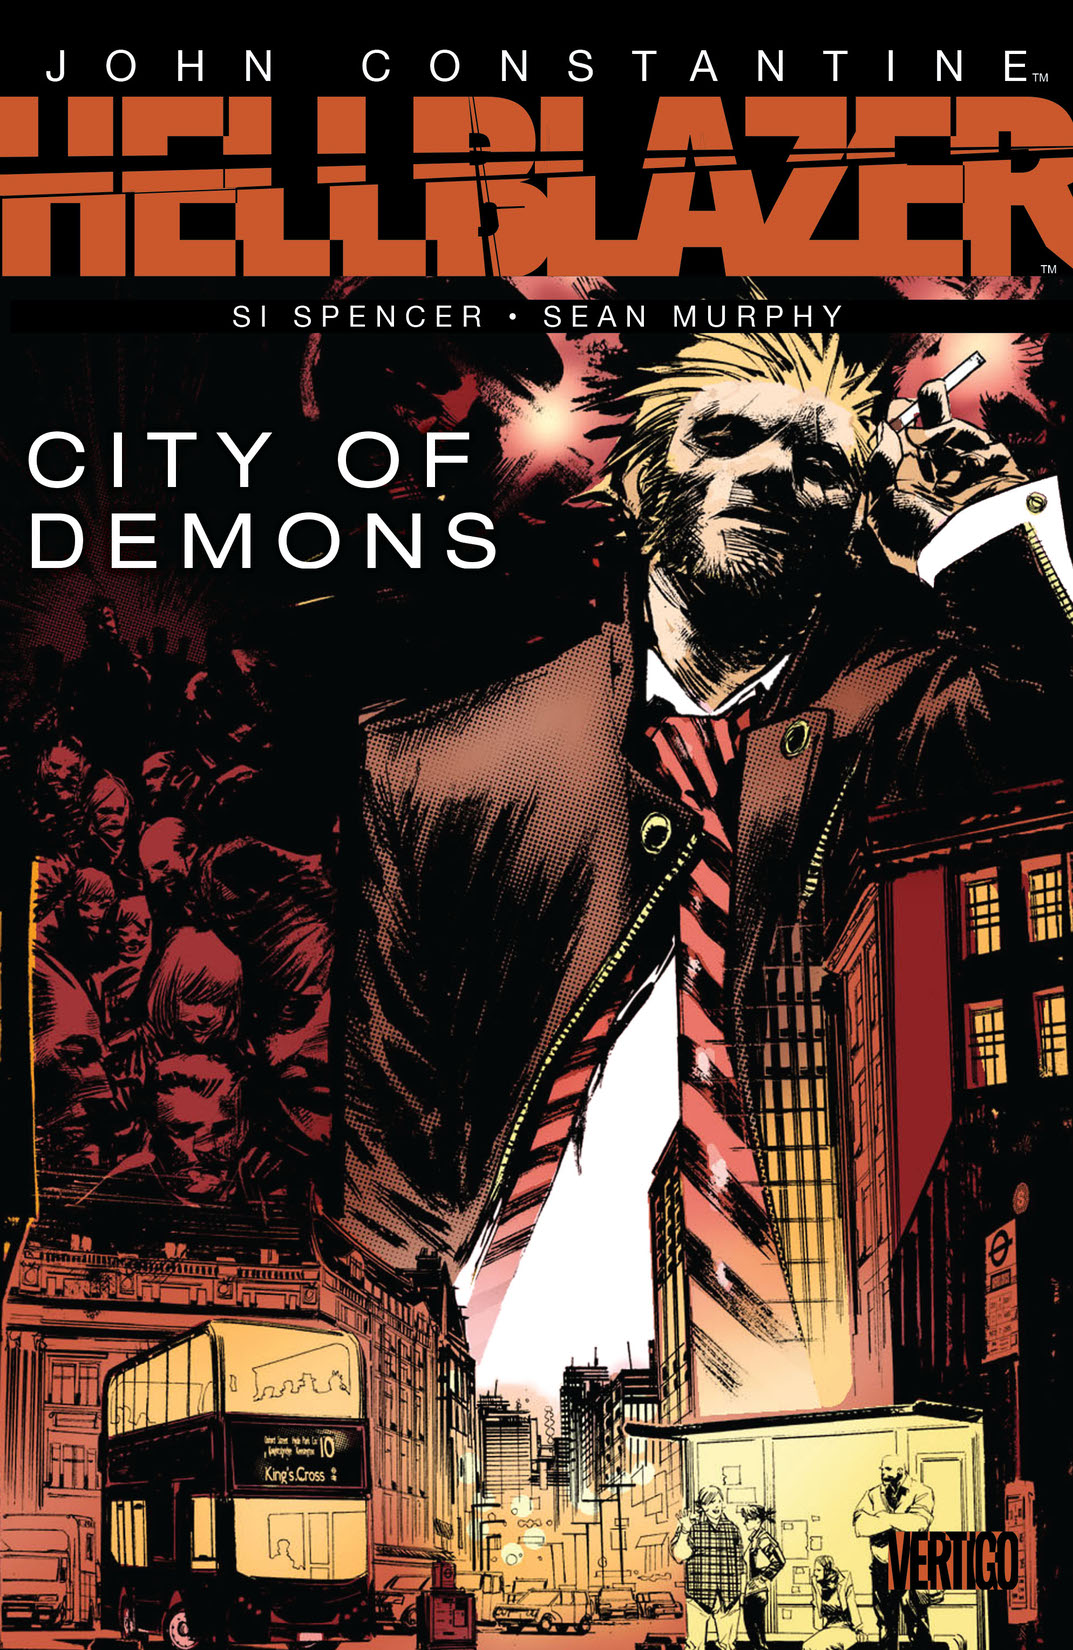 John Constantine: Hellblazer - City of Demons preview images